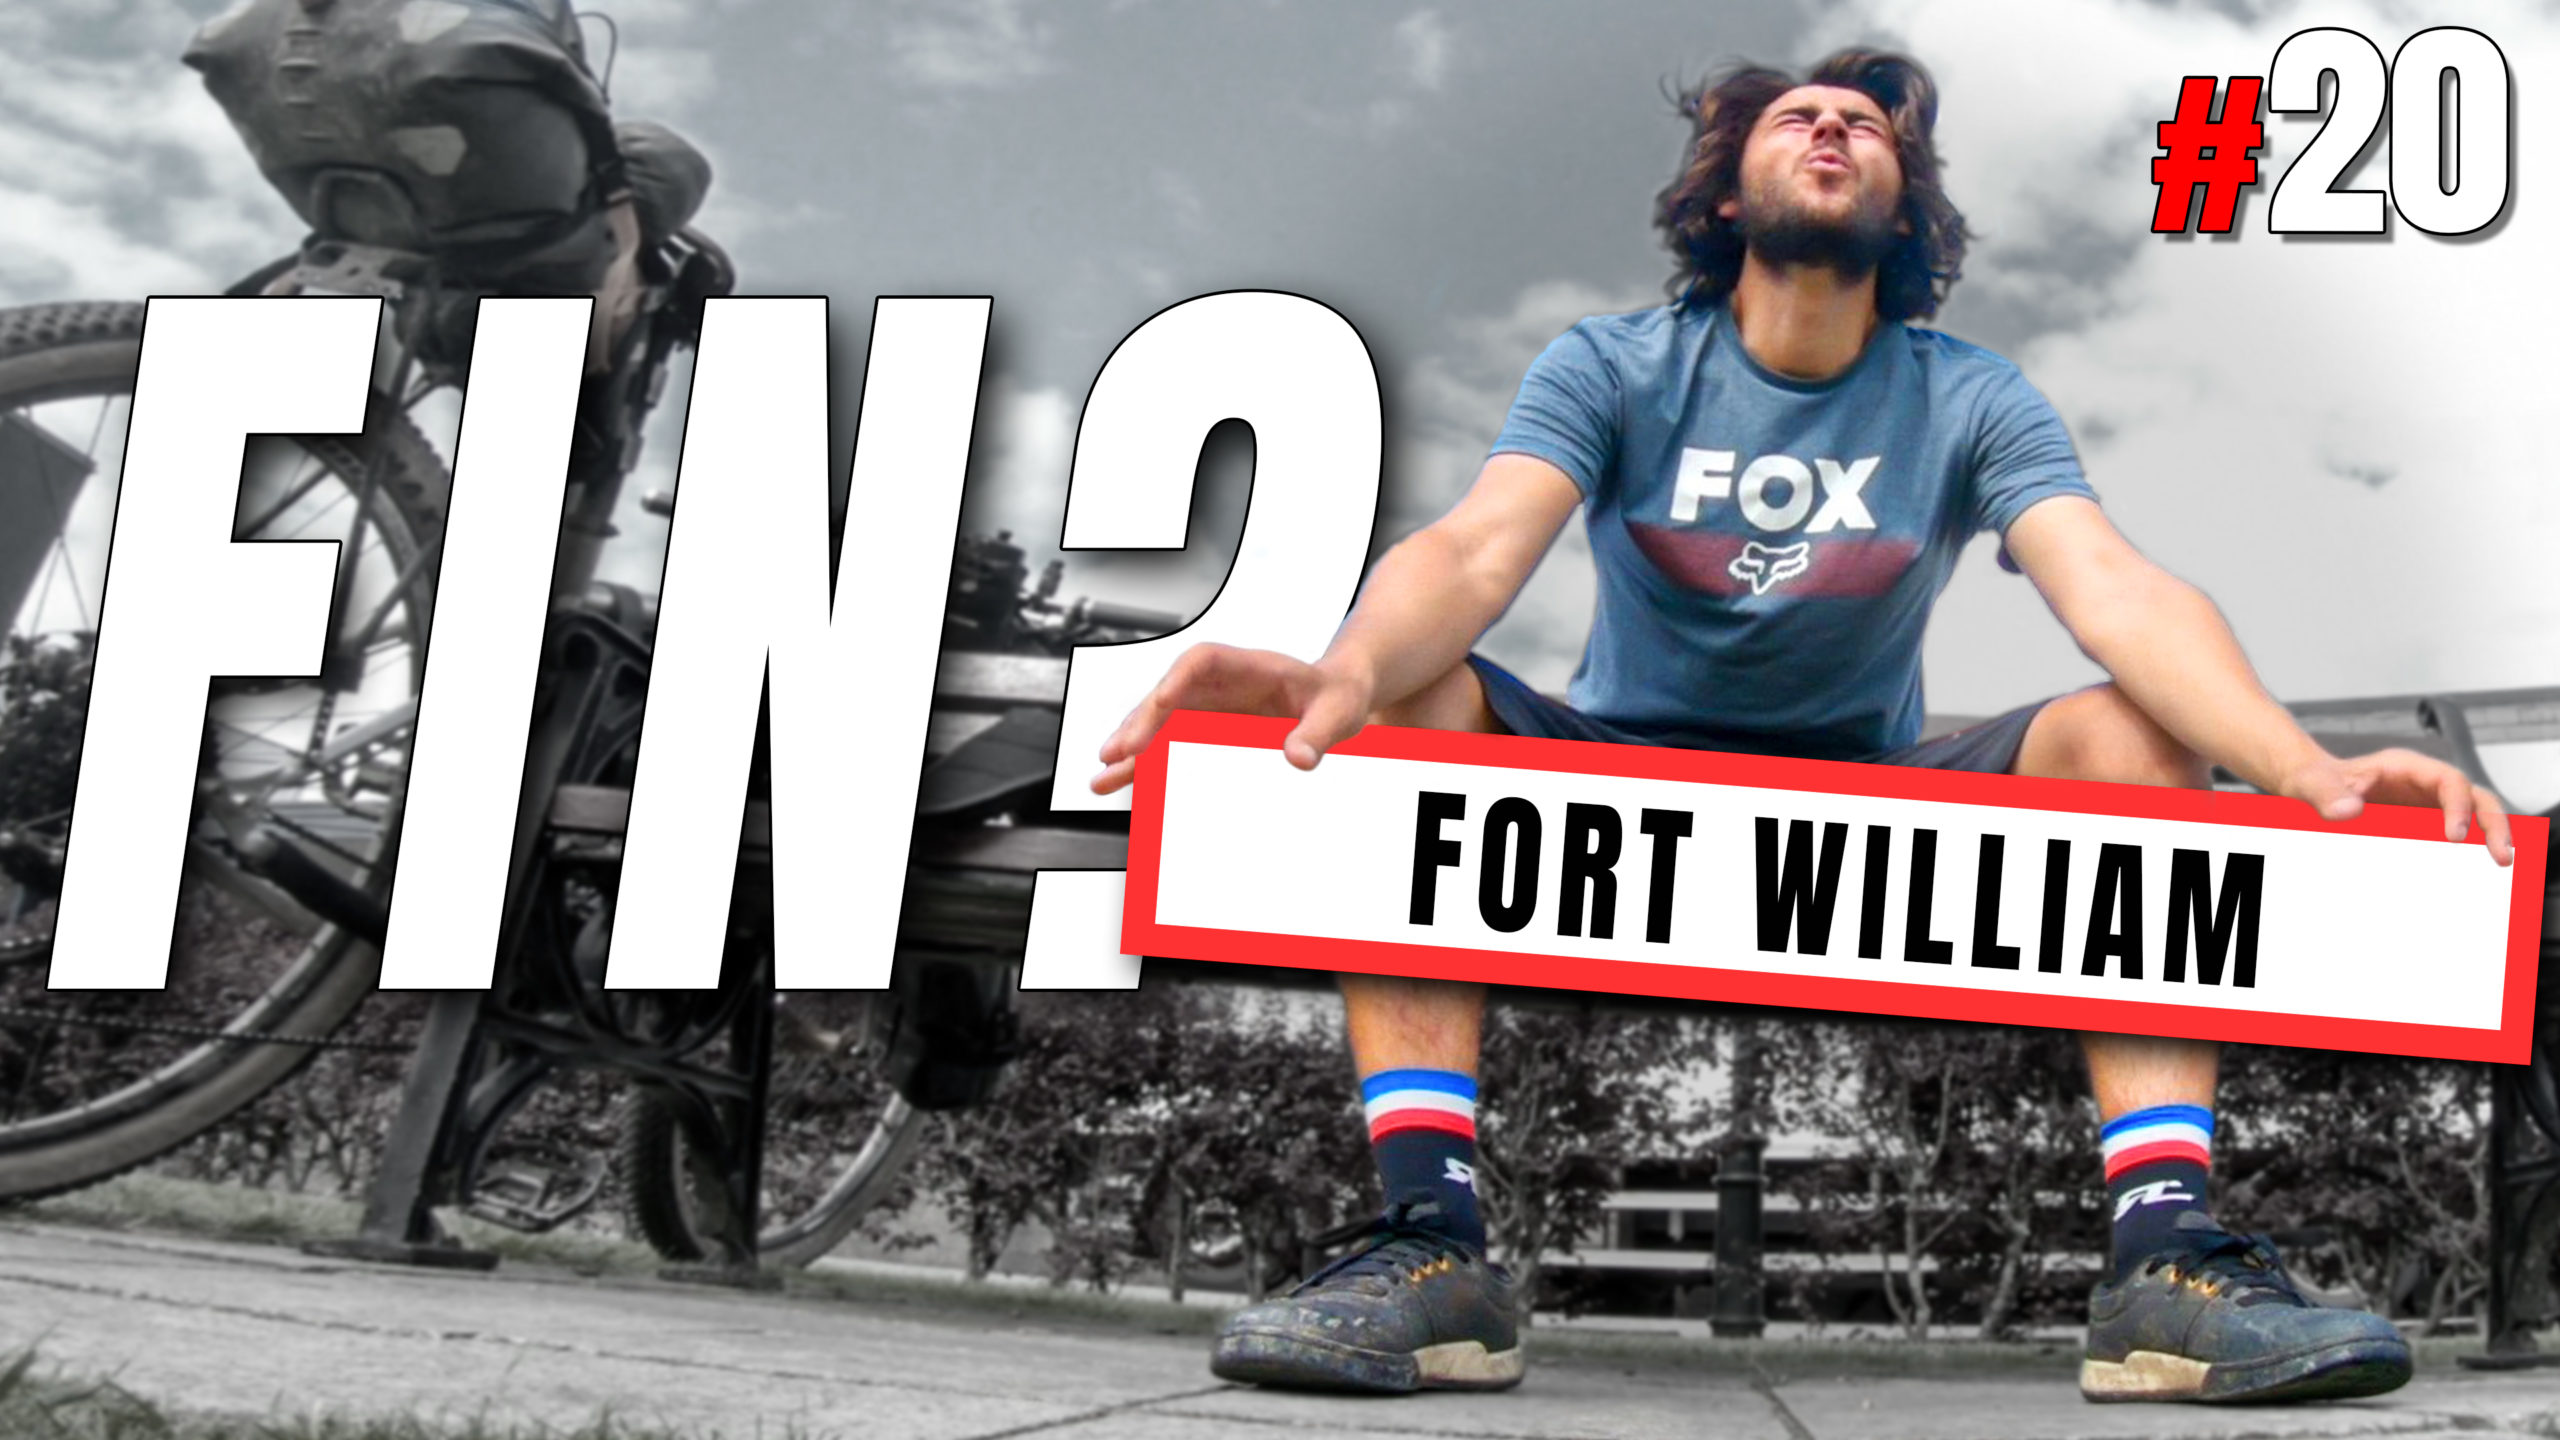 Fort-william-bikepacking